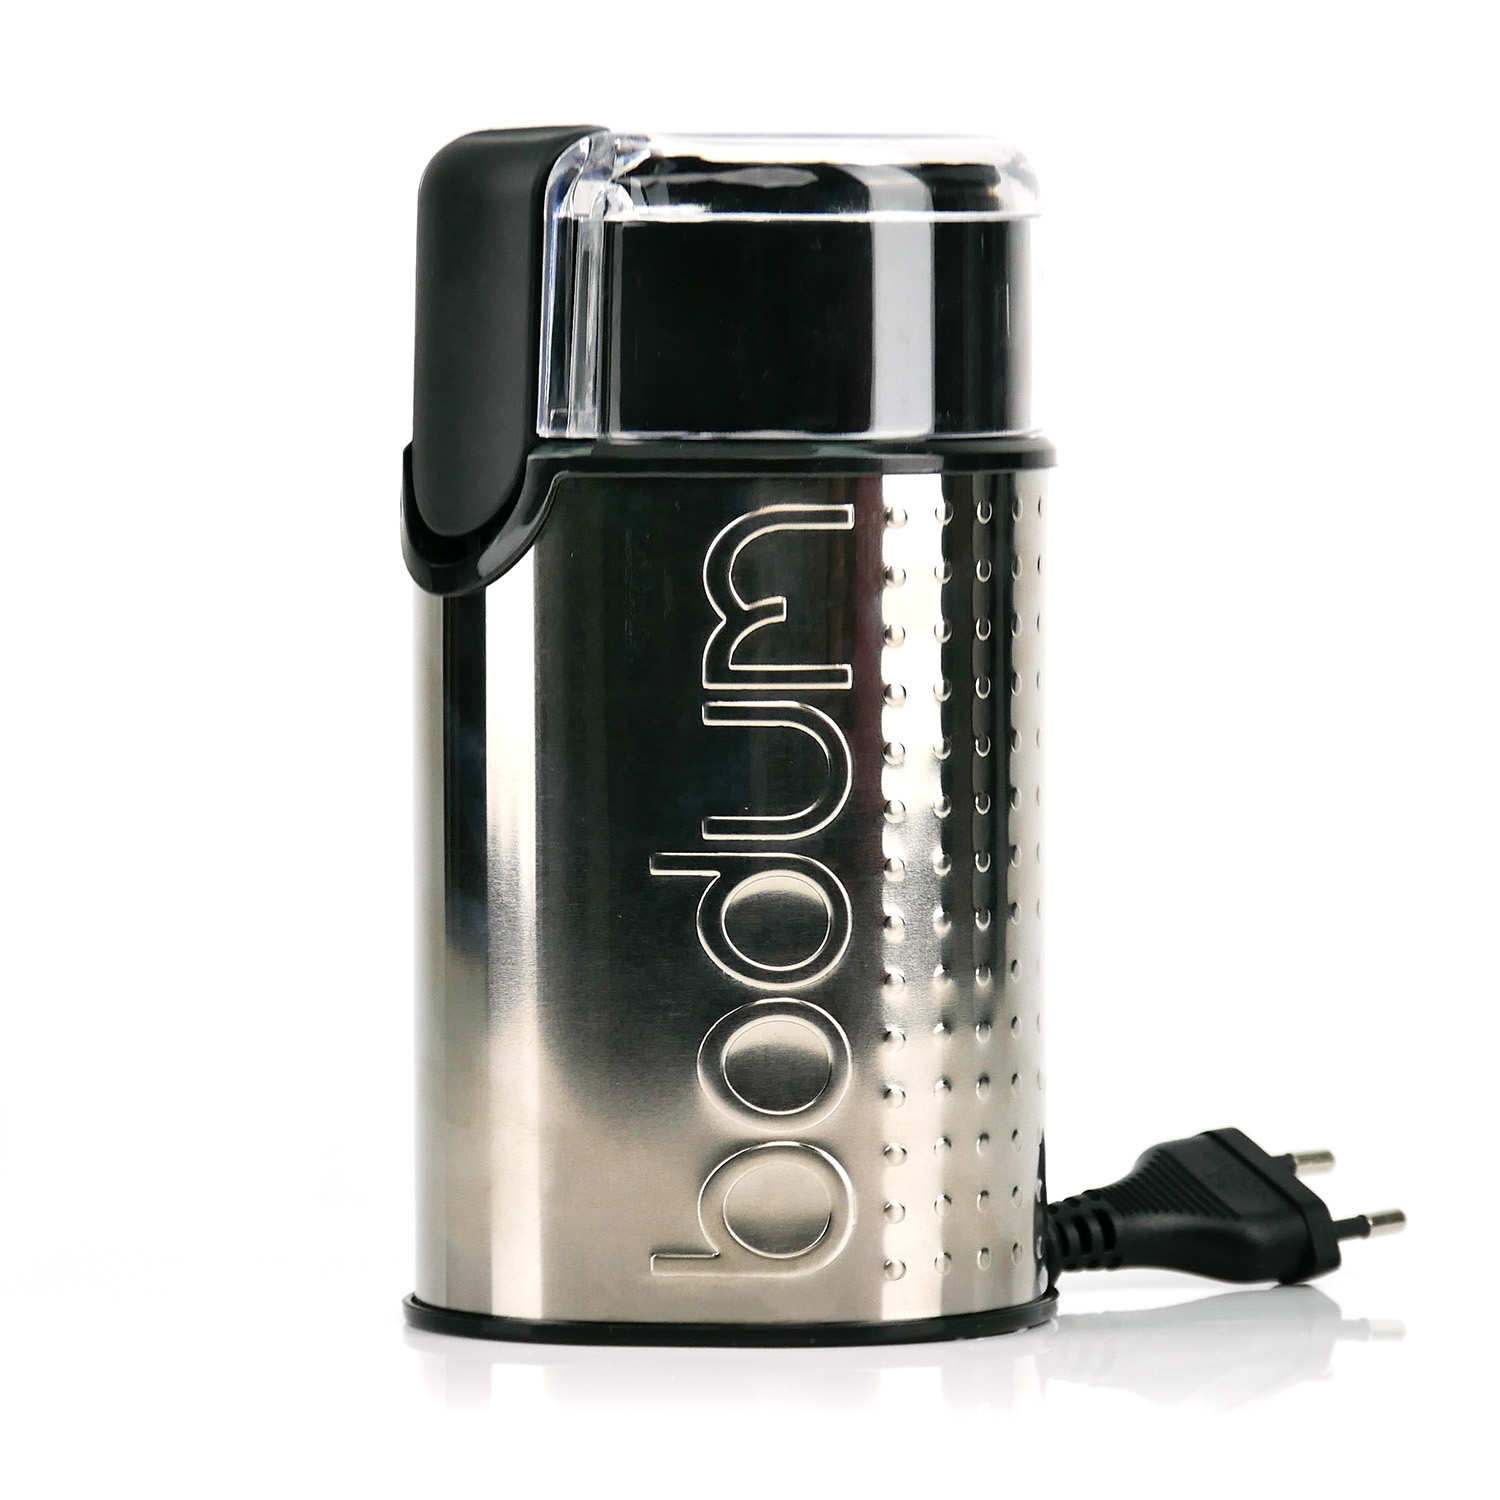 Electric slatted coffee grinder - Bistro